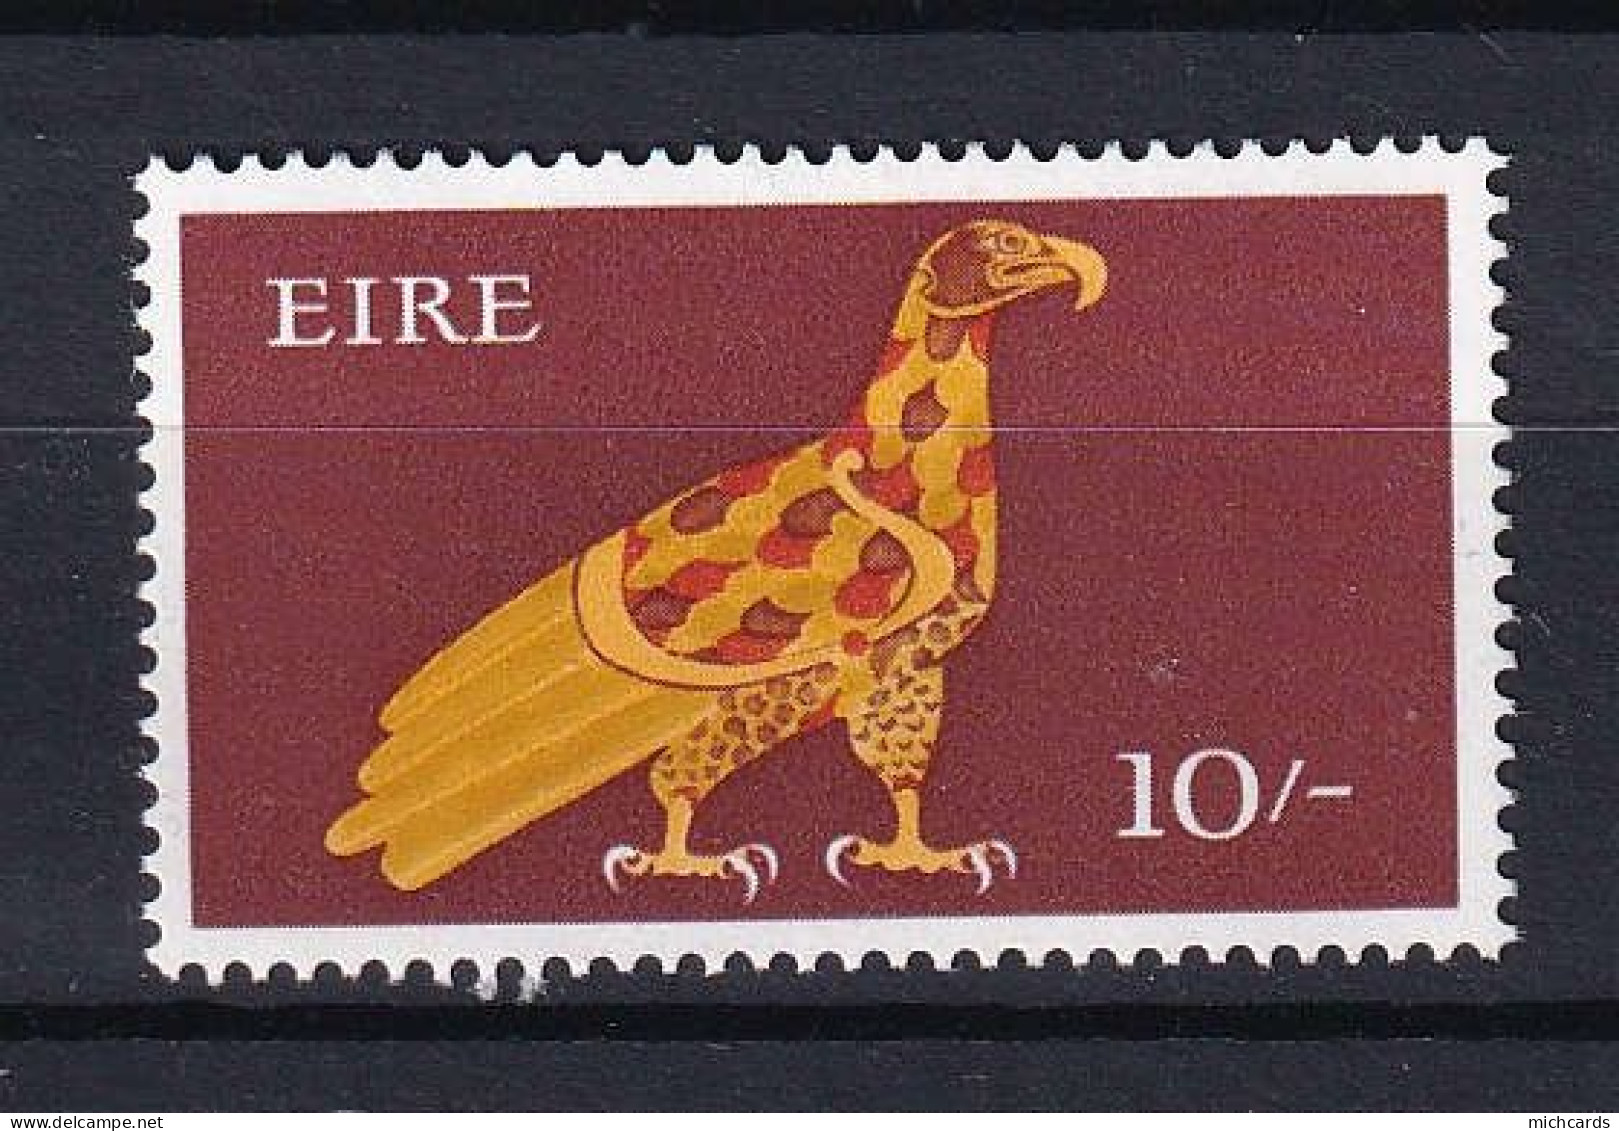 172 IRLANDE 1968/69 - Y&T 226 - Oiseau Rapace - Neuf ** (MNH) Sans Charniere - Unused Stamps